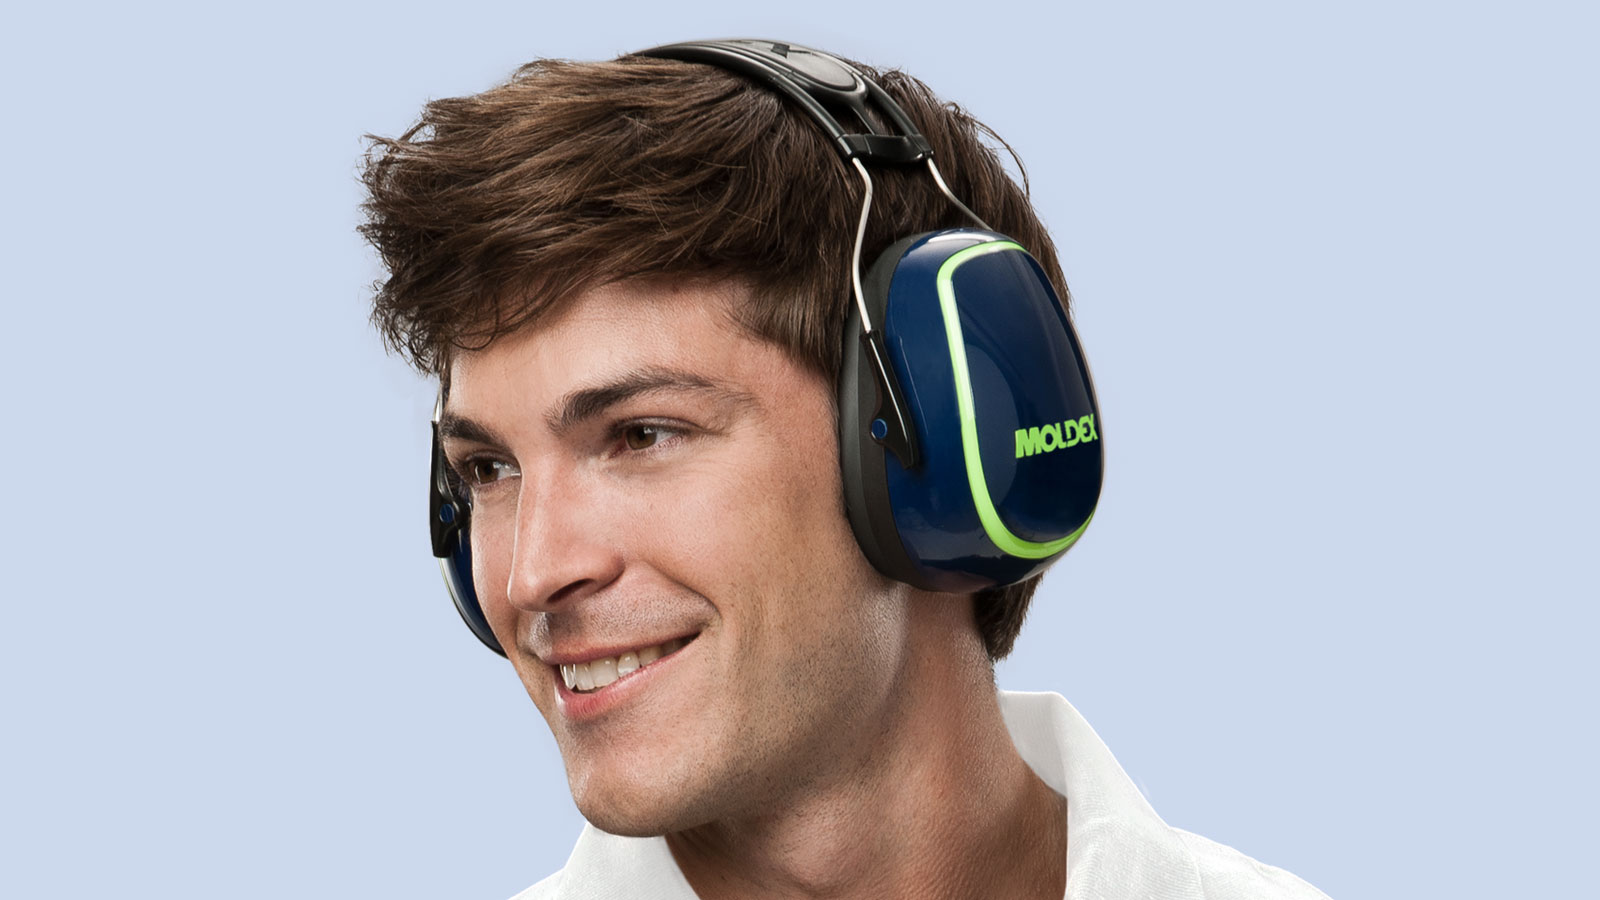 MOLDEX M5  Ear Muffs Light Ajustment Headband Ear Defenders SNR 34dB EarMuffs 